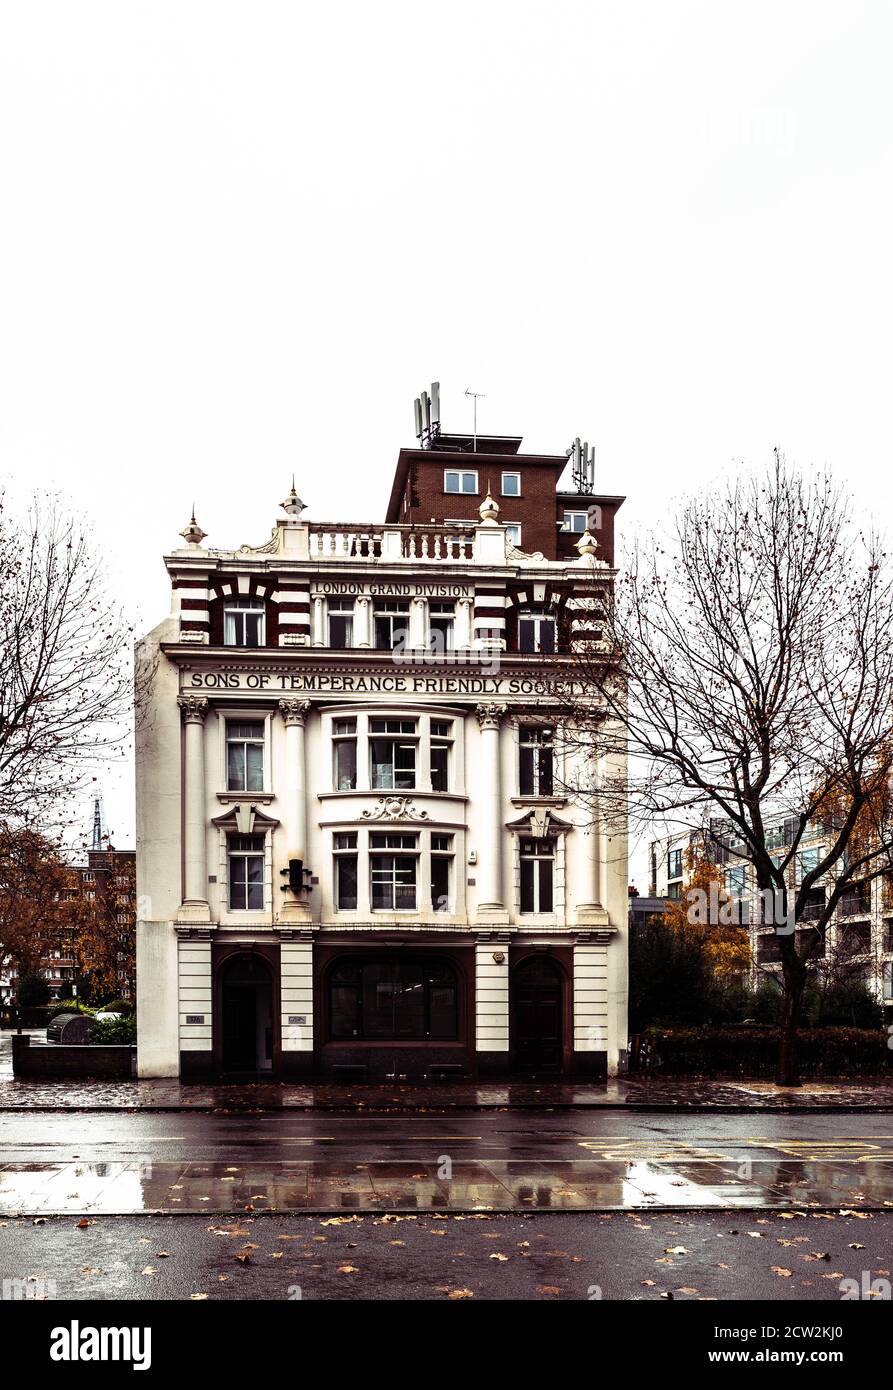 The Sons of Temperance Friendly Society building, Blackfriars Road, Southwark, London, England, UK. Stock Photo